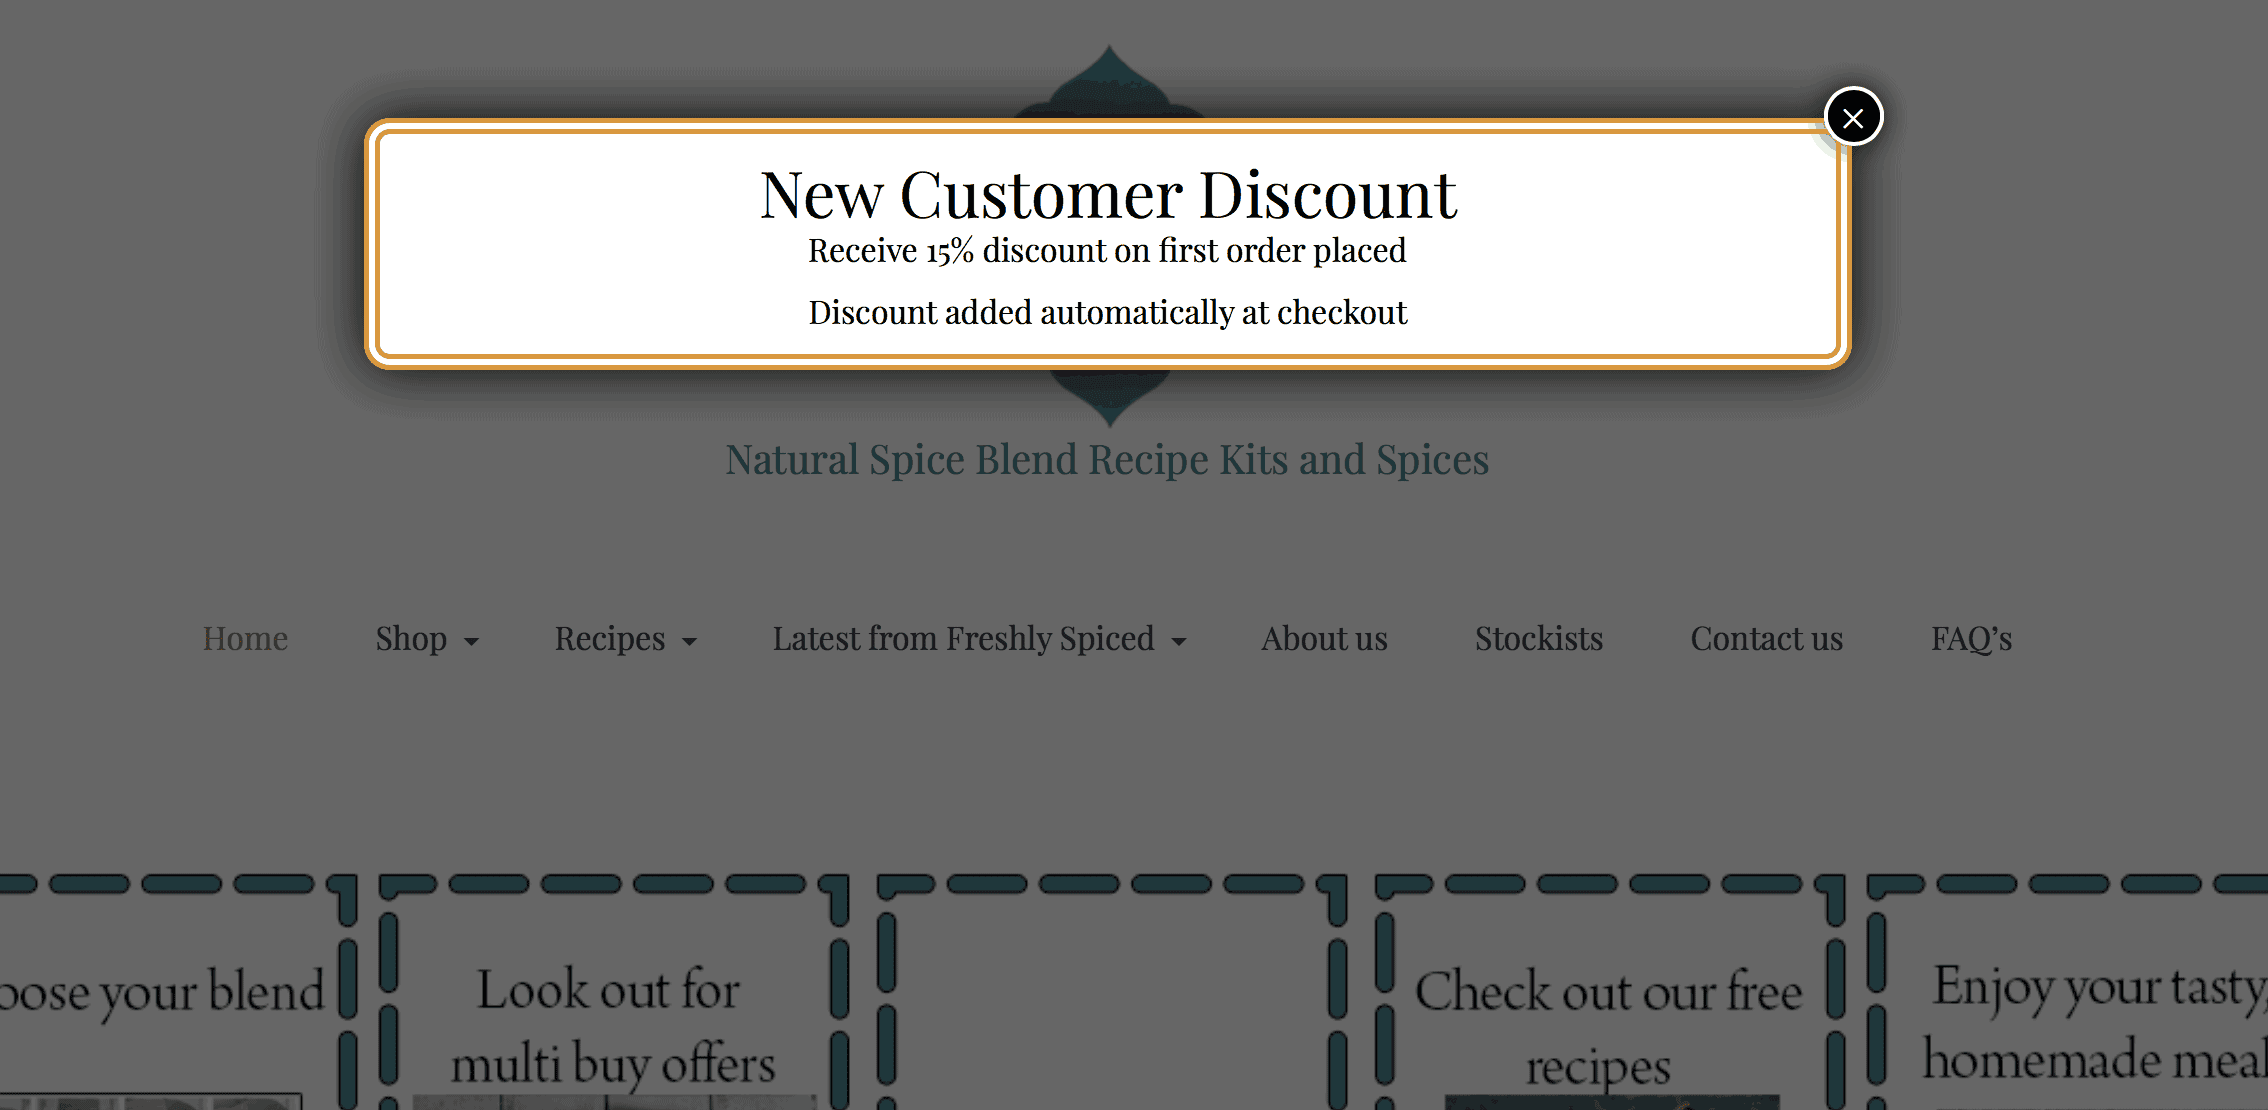 New customer discount!